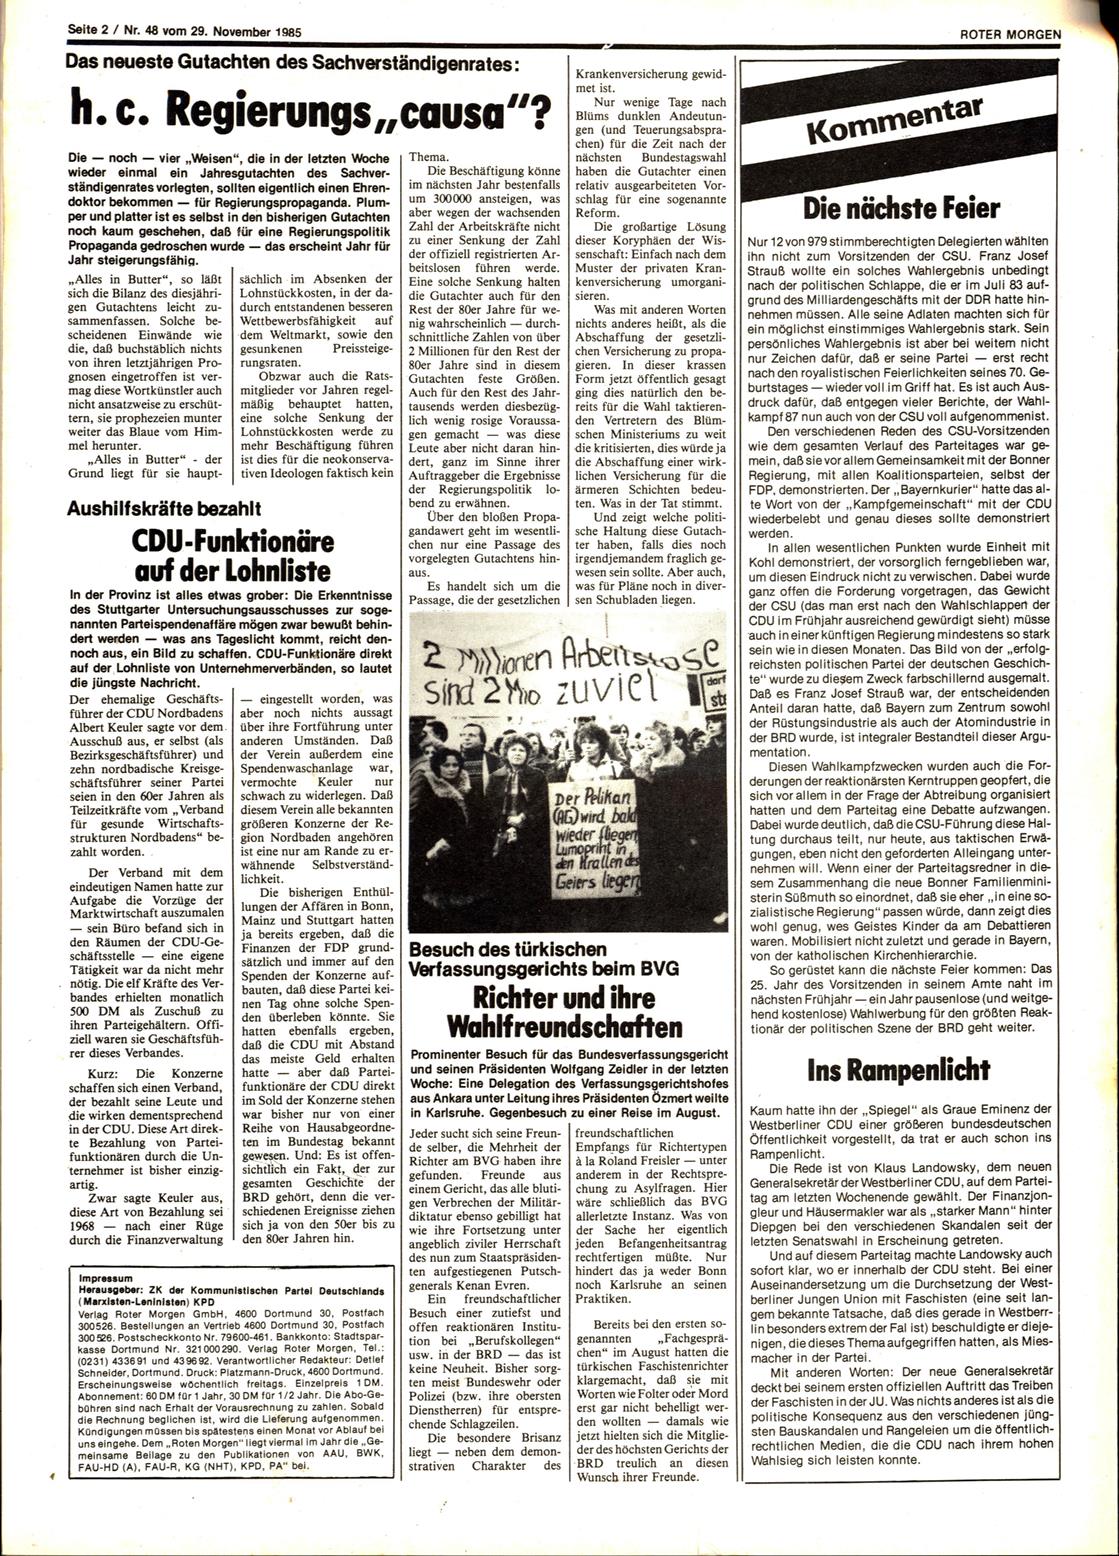 Roter Morgen, 19. Jg., 29. November 1985, Nr. 48, Seite 2